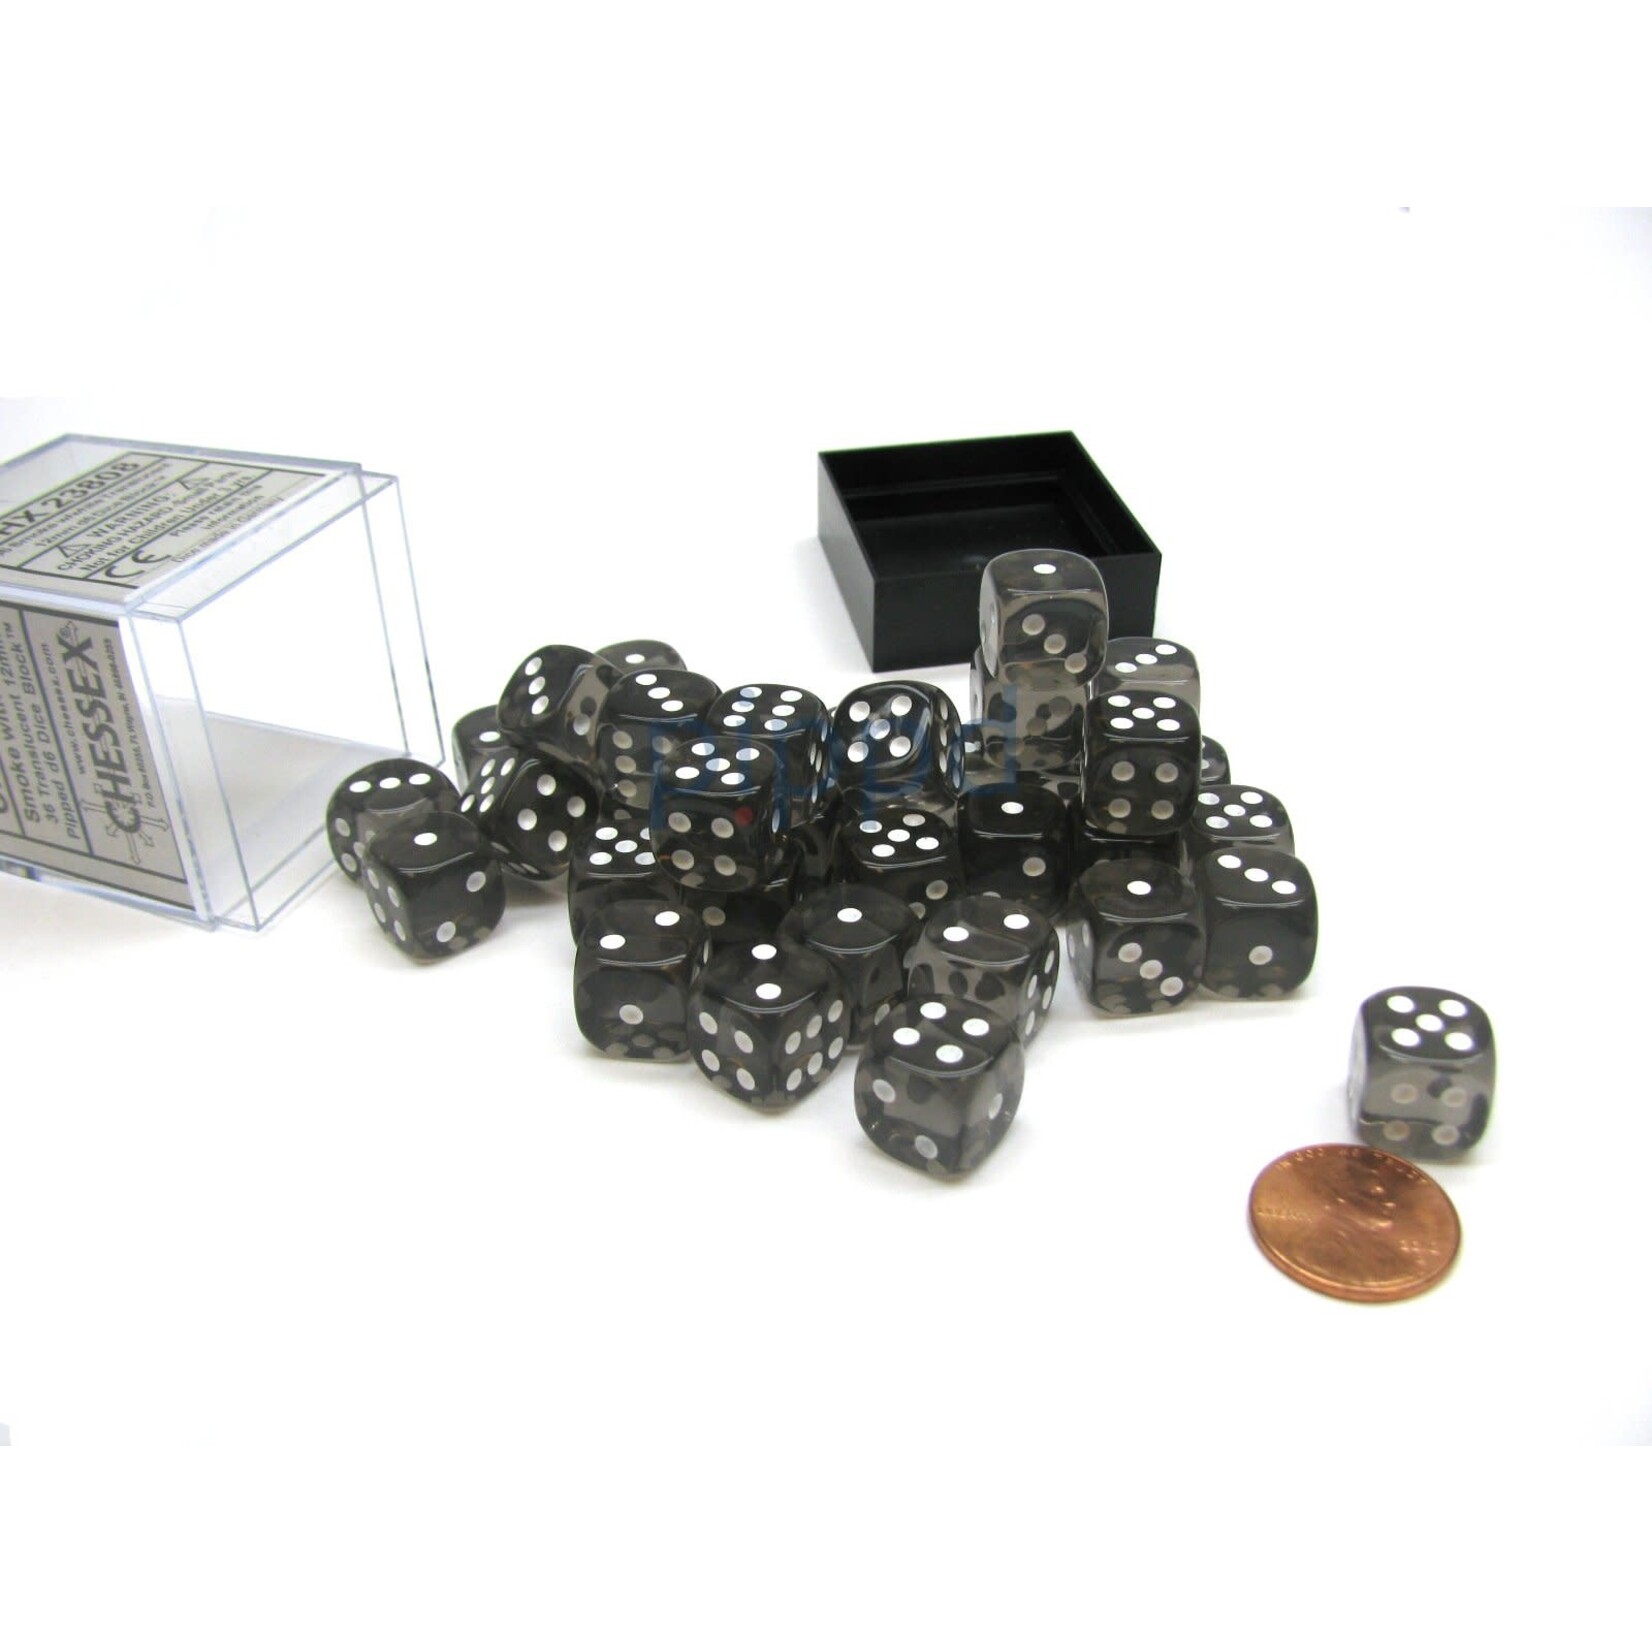 Chessex Translucent Smoke/white 12mm d6 Dice Block (36 dice)